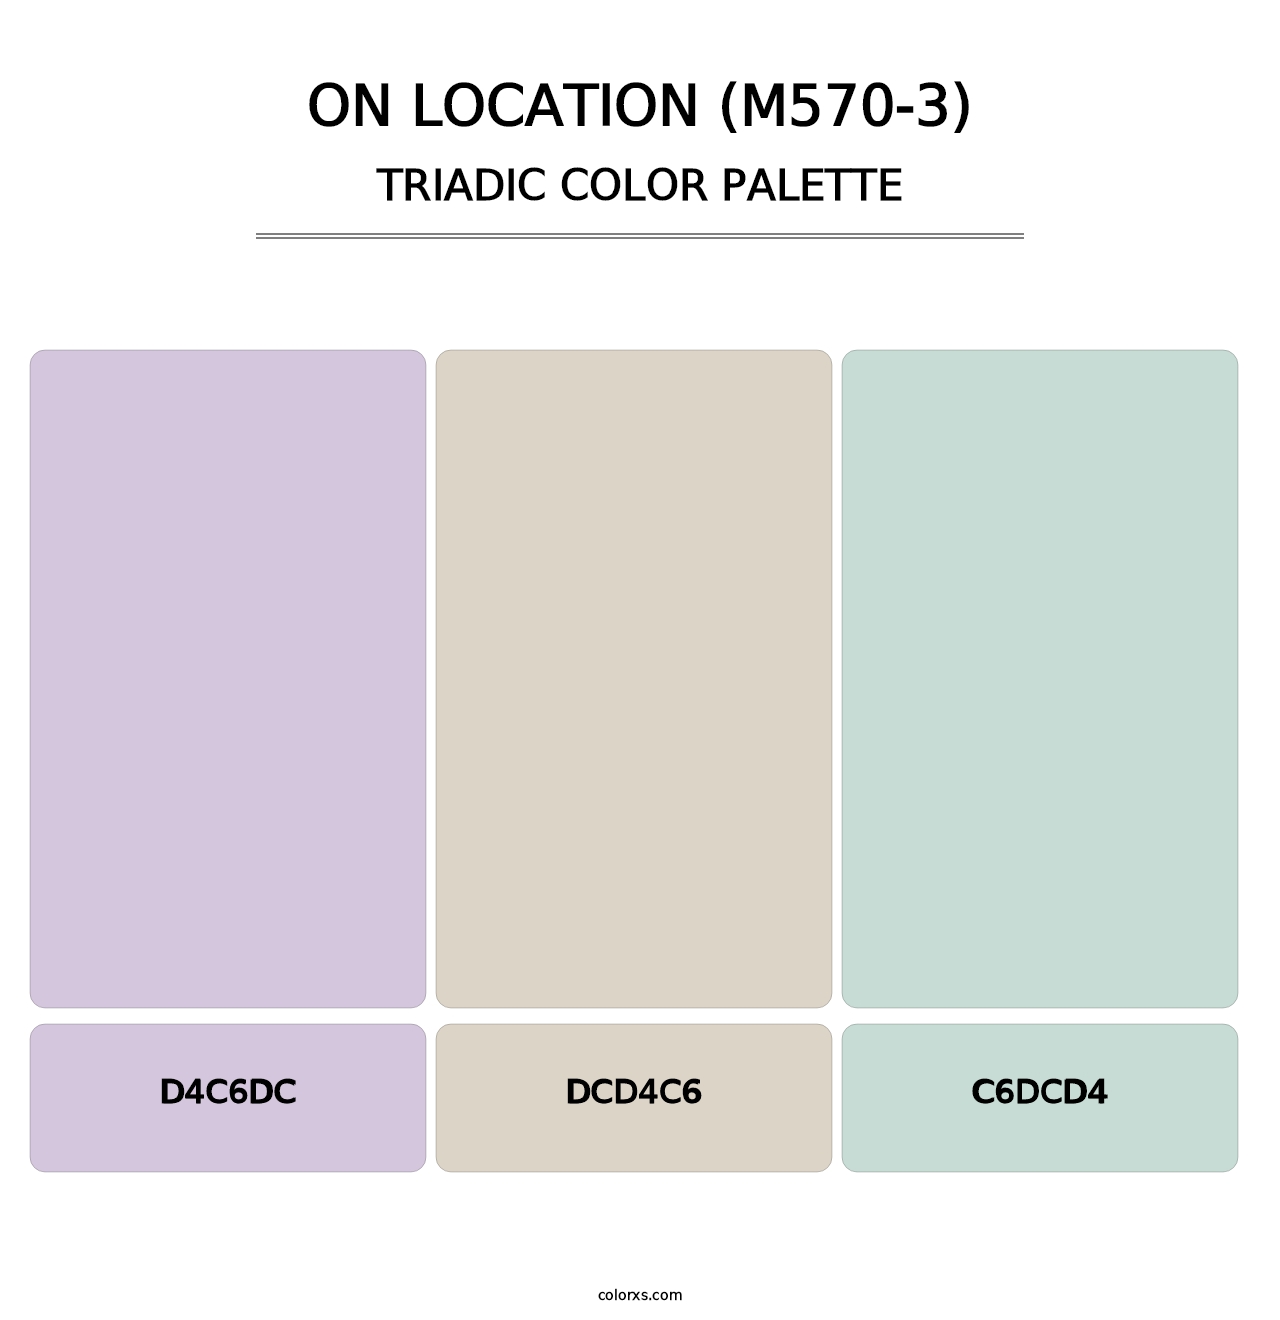 On Location (M570-3) - Triadic Color Palette